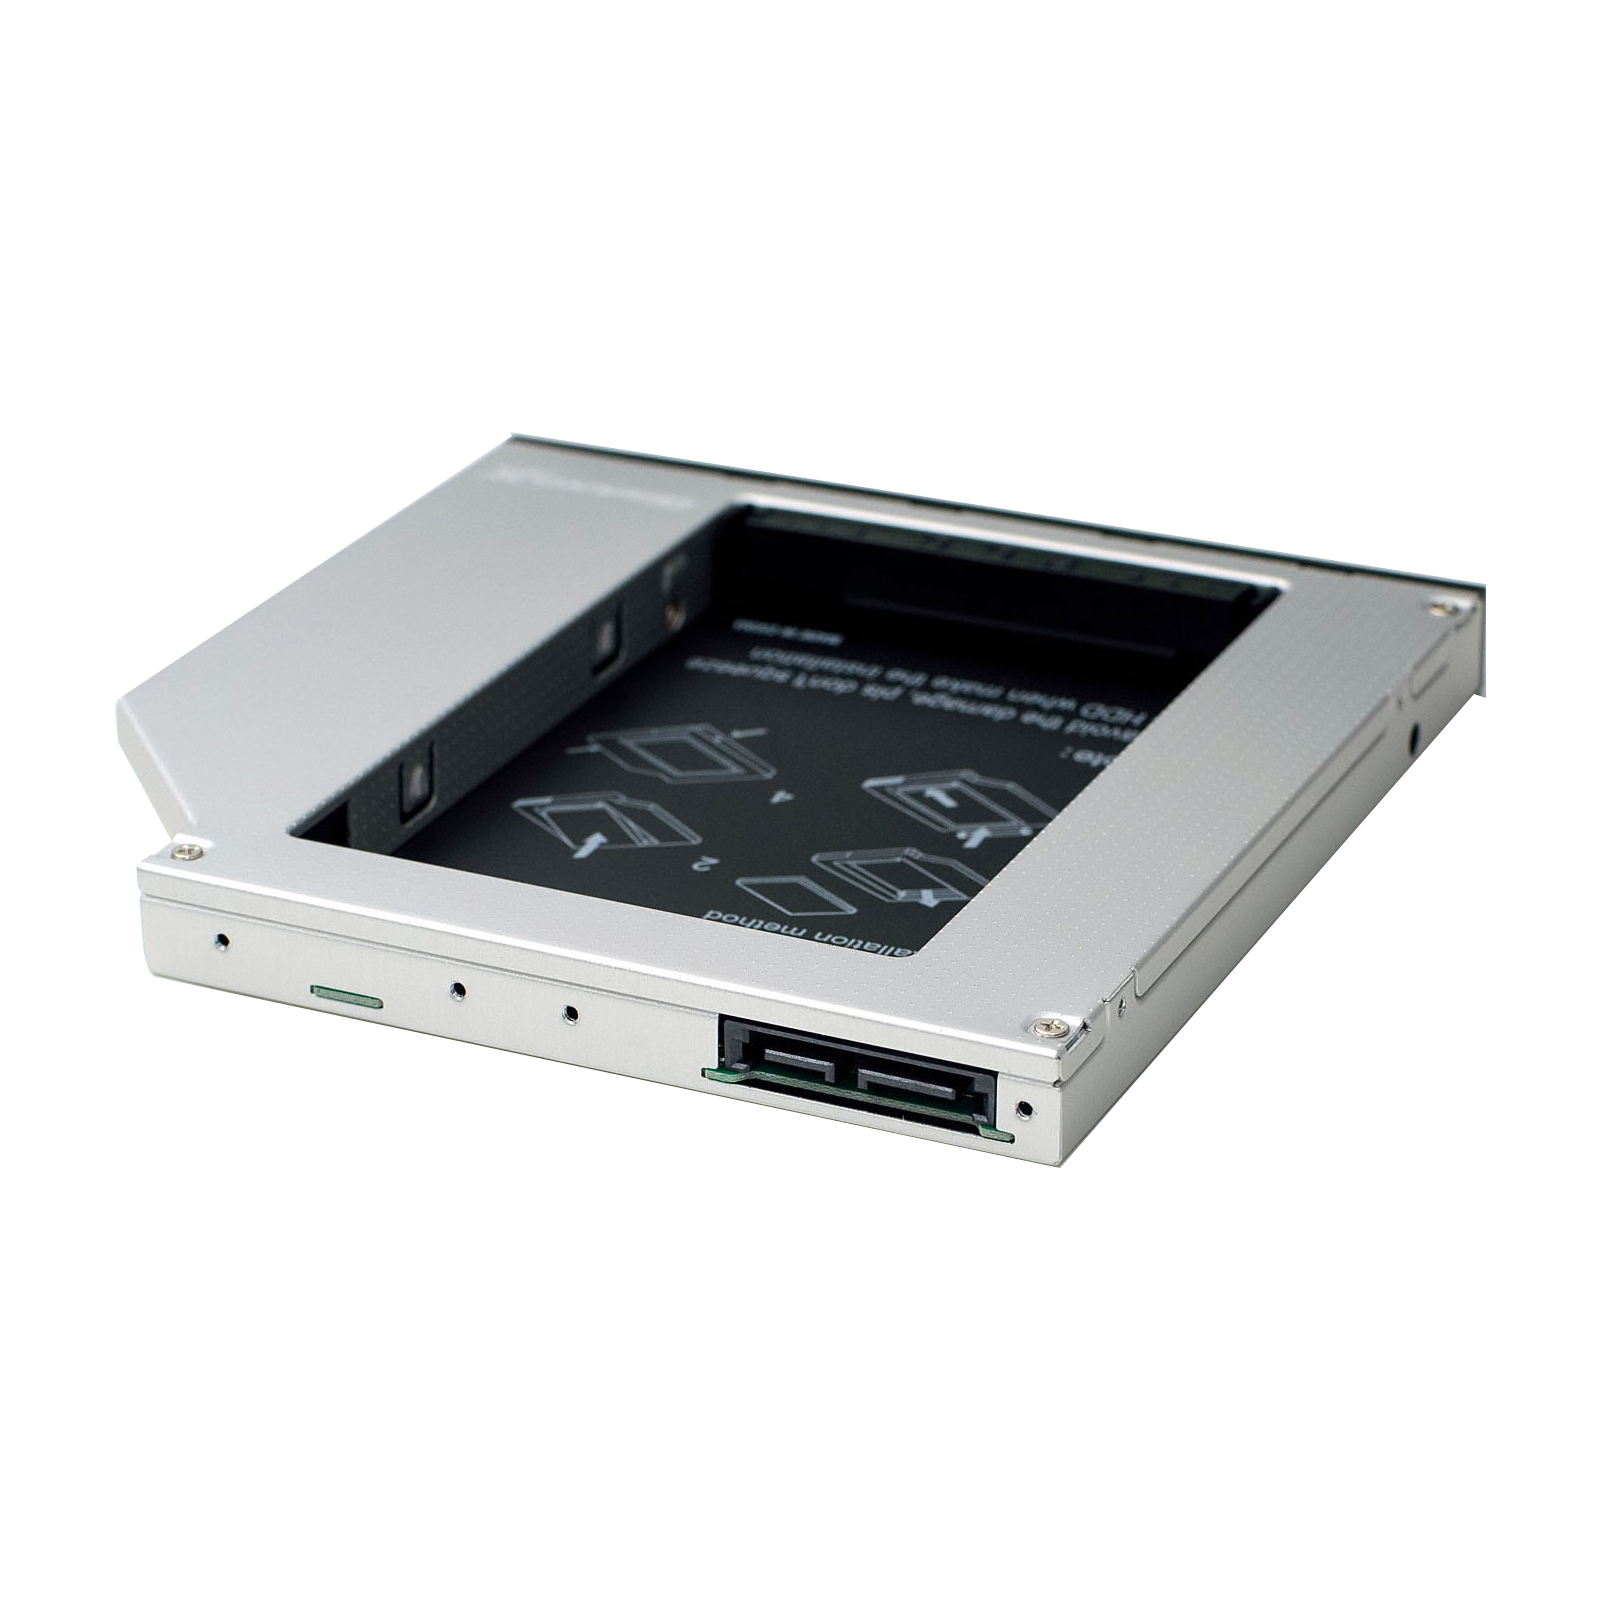 Фрейм-переходник Grand-X HDD 2.5'' to notebook 12.7 mm ODD SATA/mSATA (HDC-25N) изображение 2